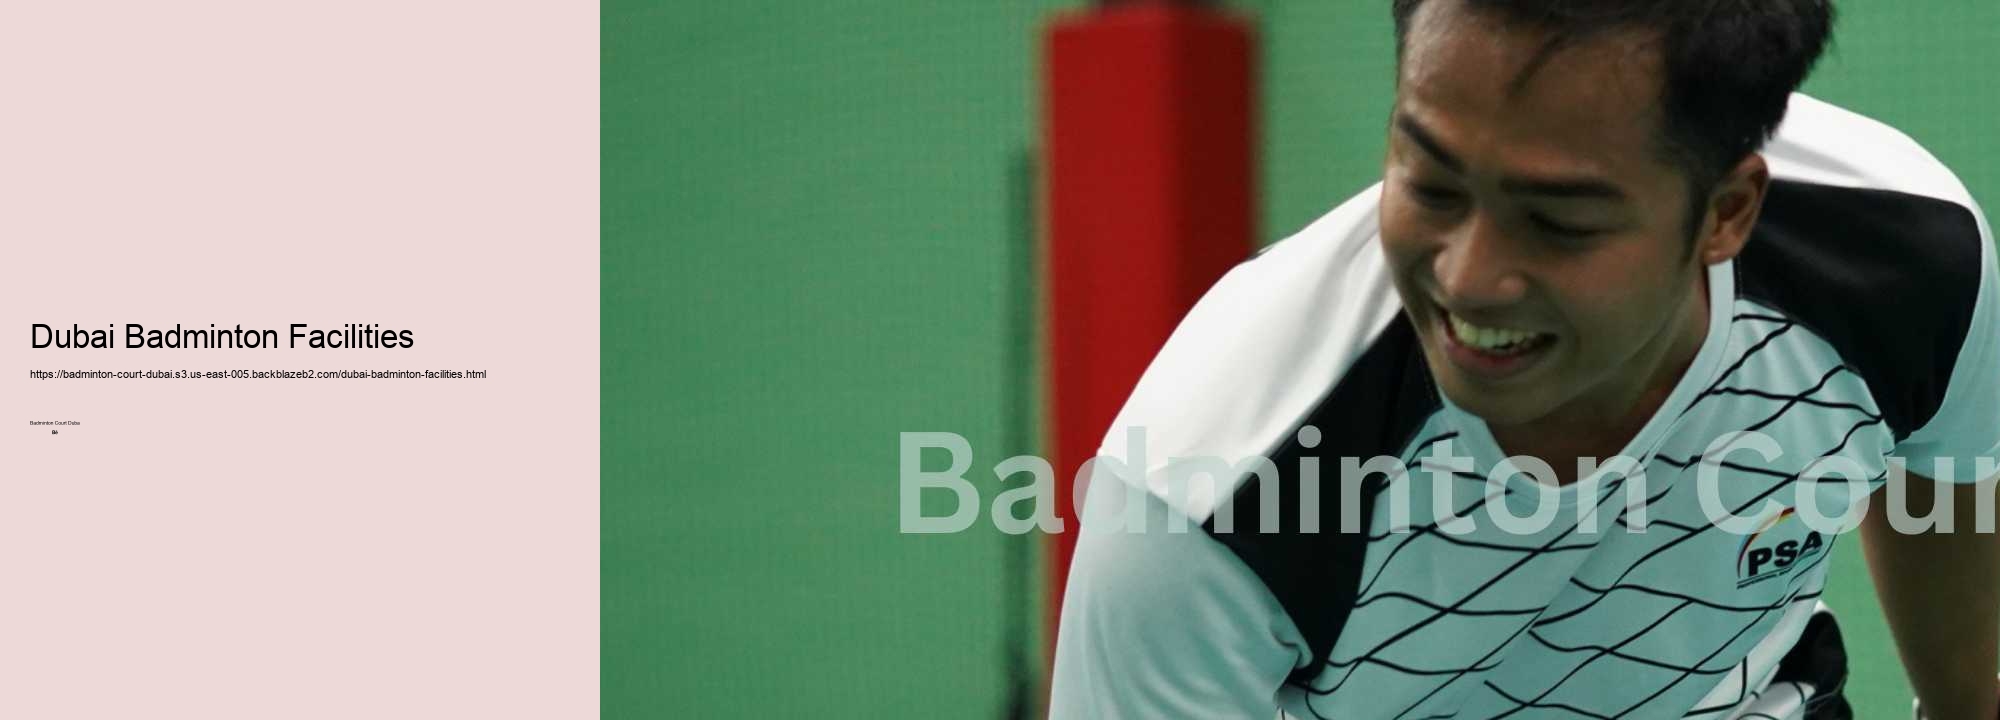 Dubai Badminton Facilities